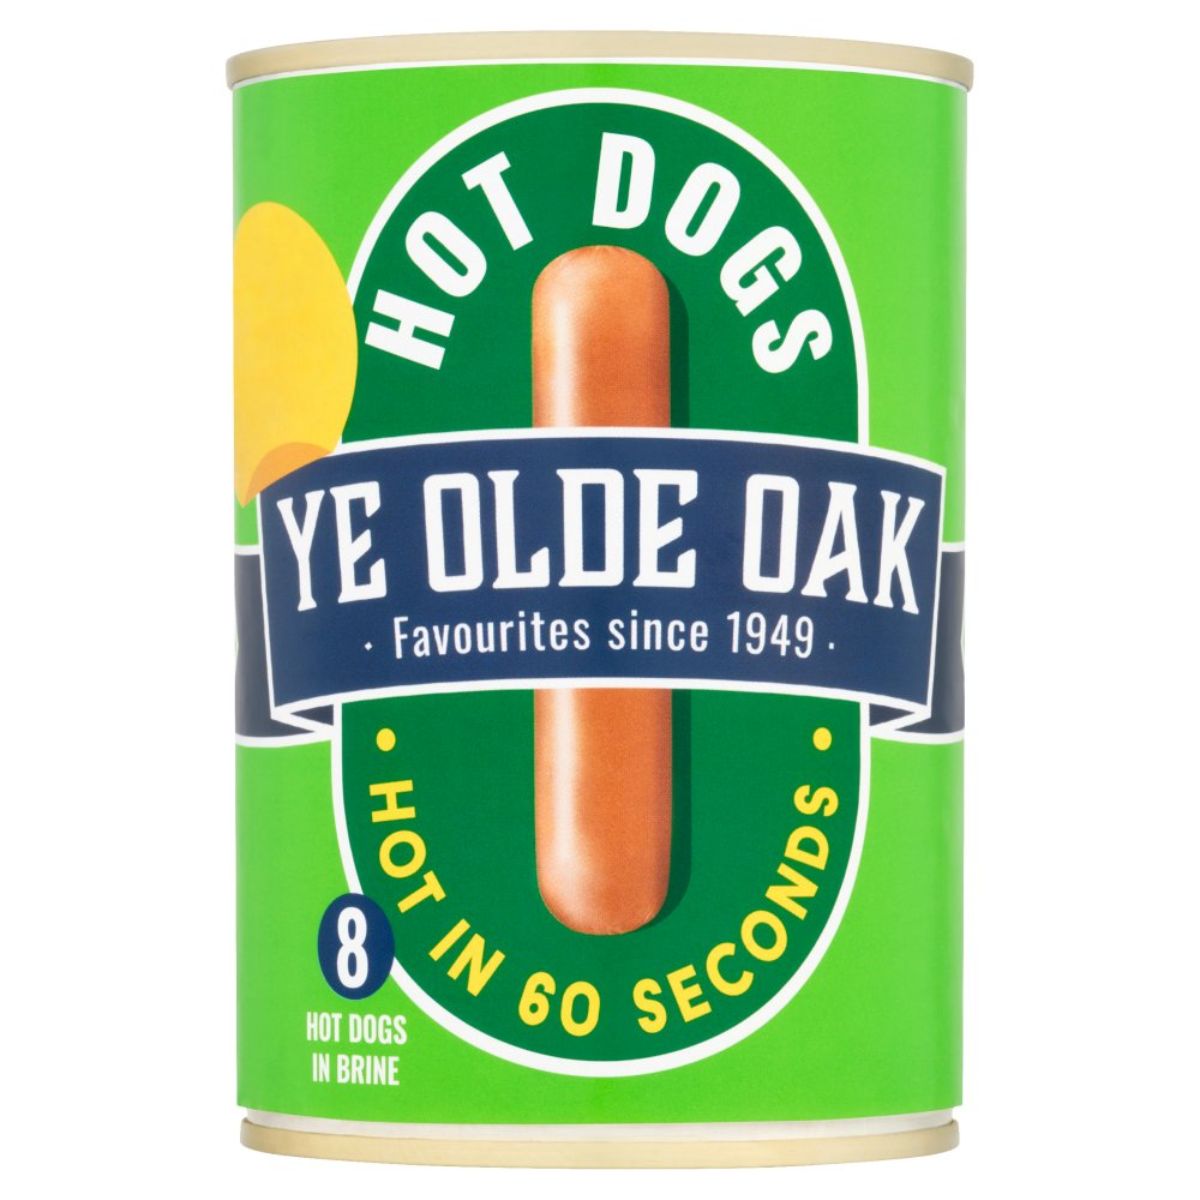 Ye Olde Oak - 8 Hot Dogs in 60 Seconds - 400g hot dogs in a can.